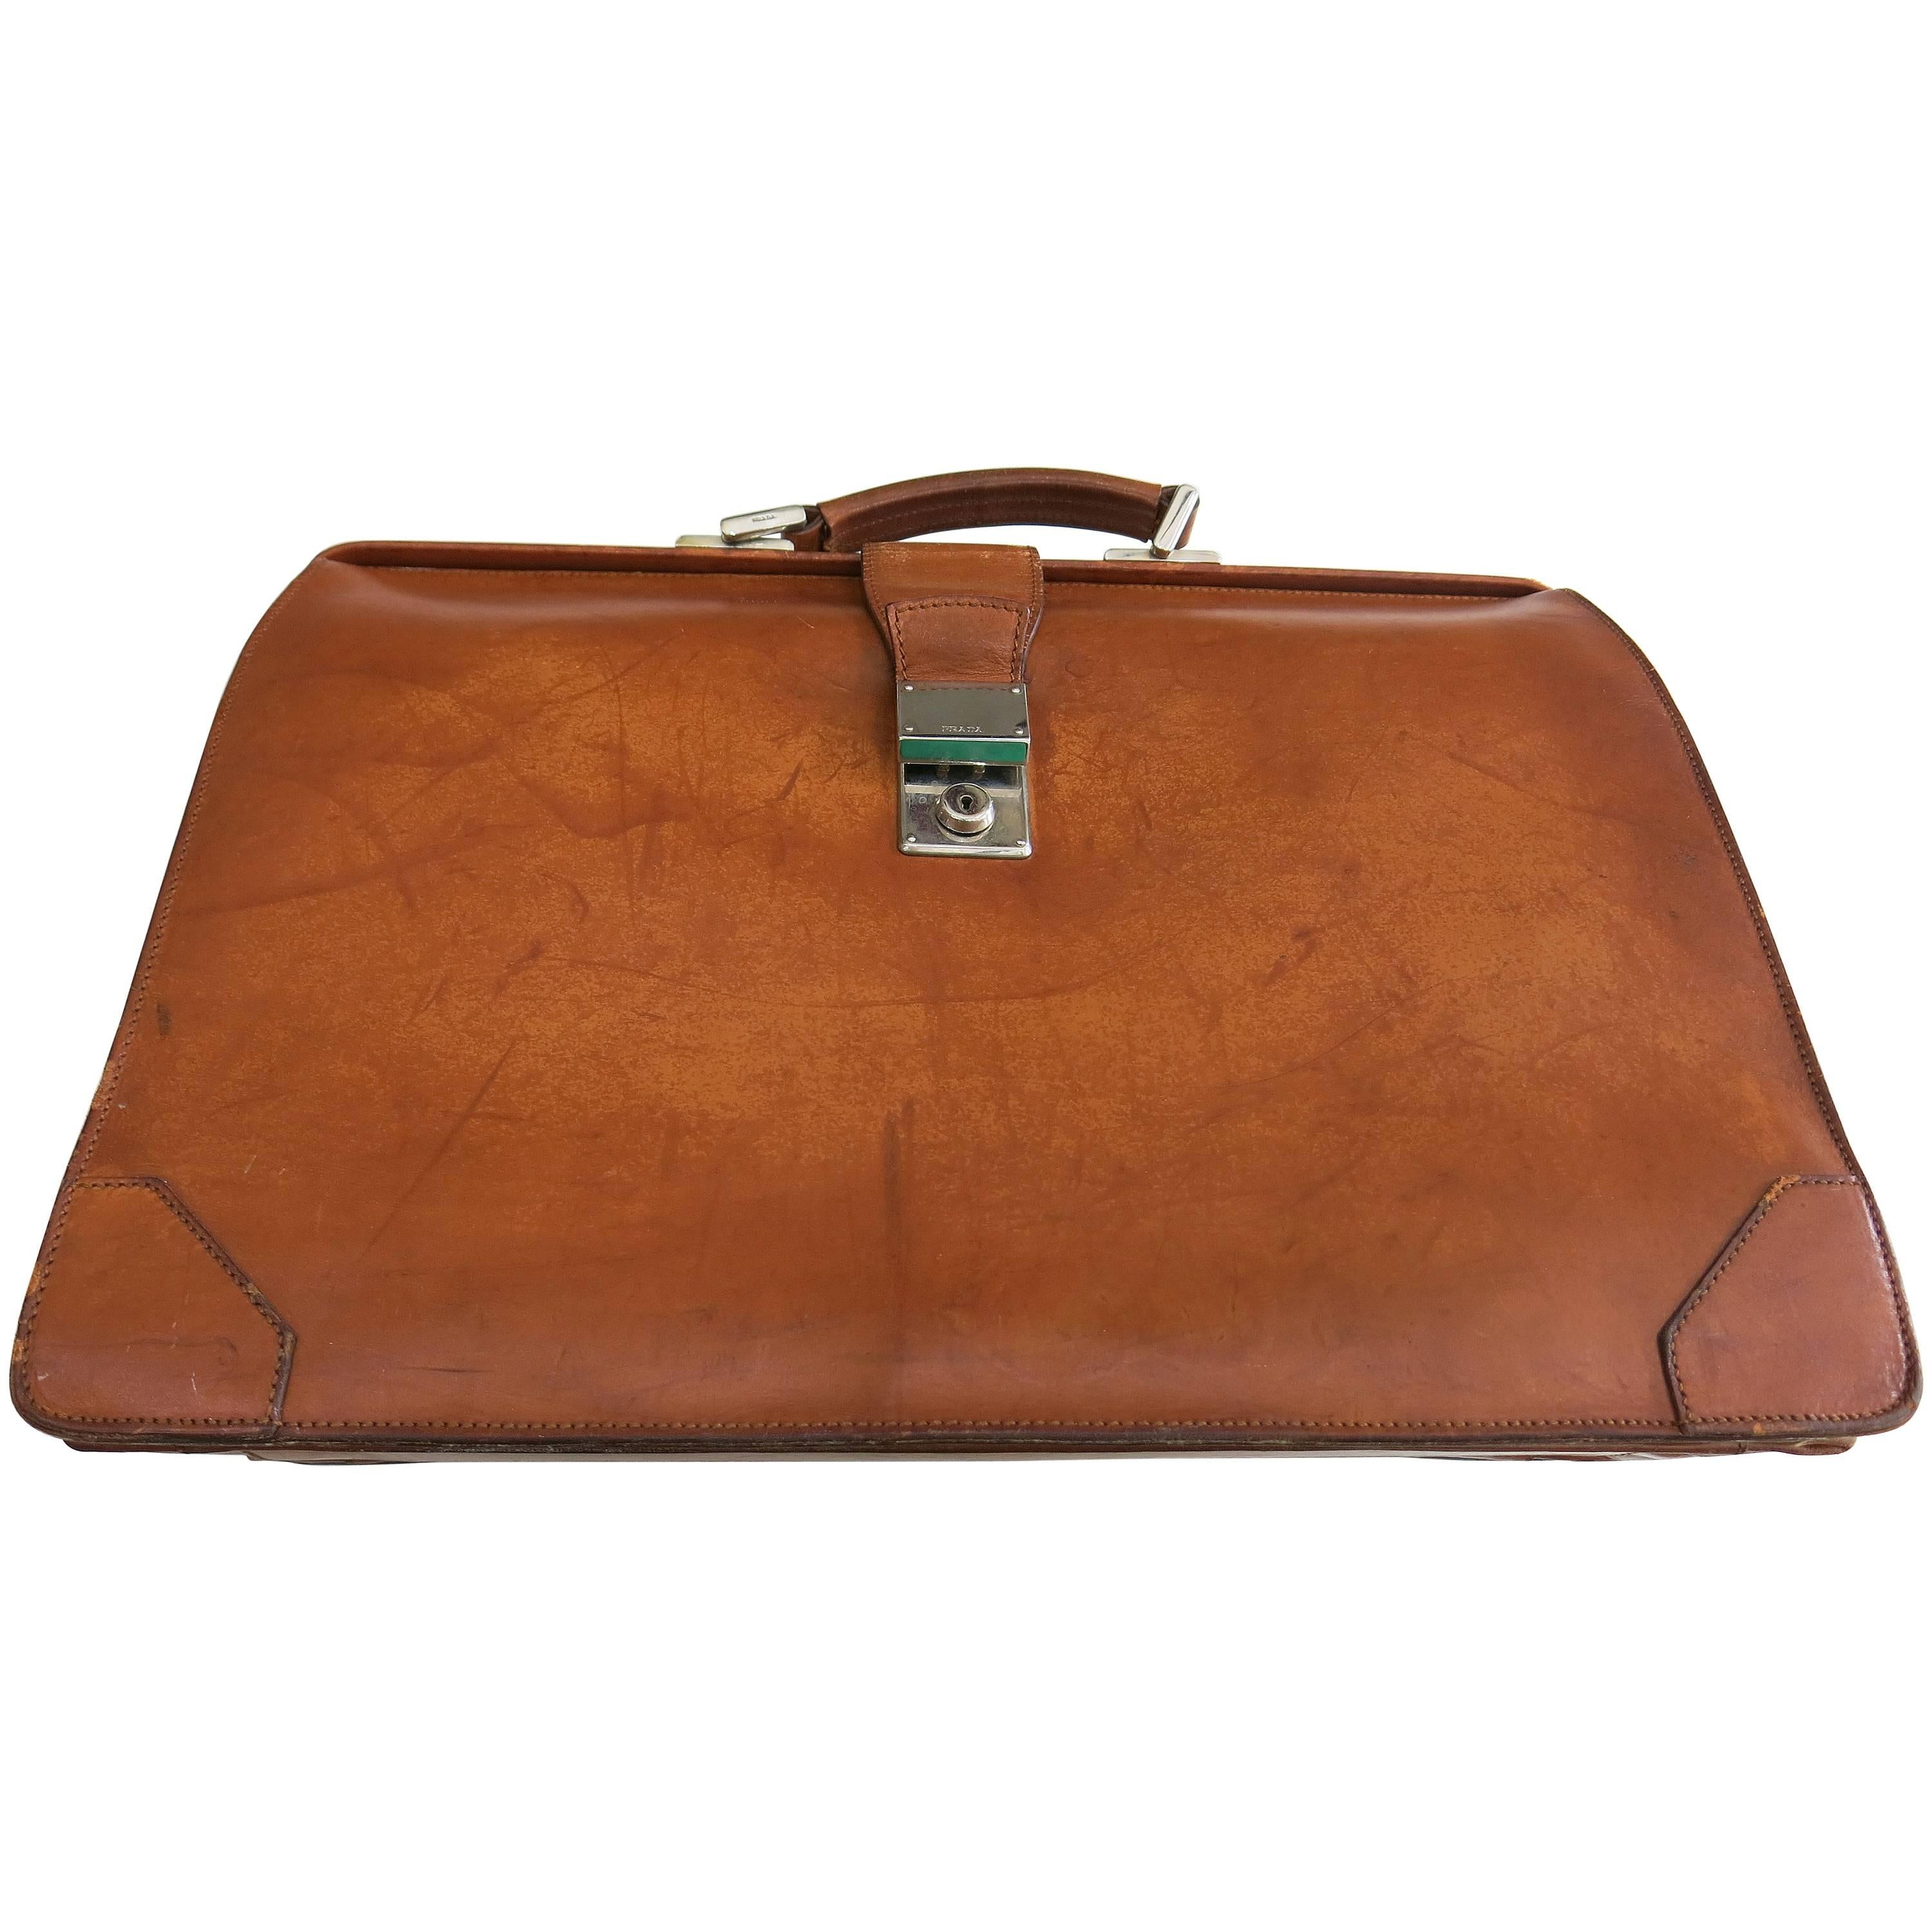 Prada Brown Leather Top Handle Carry-On Bag